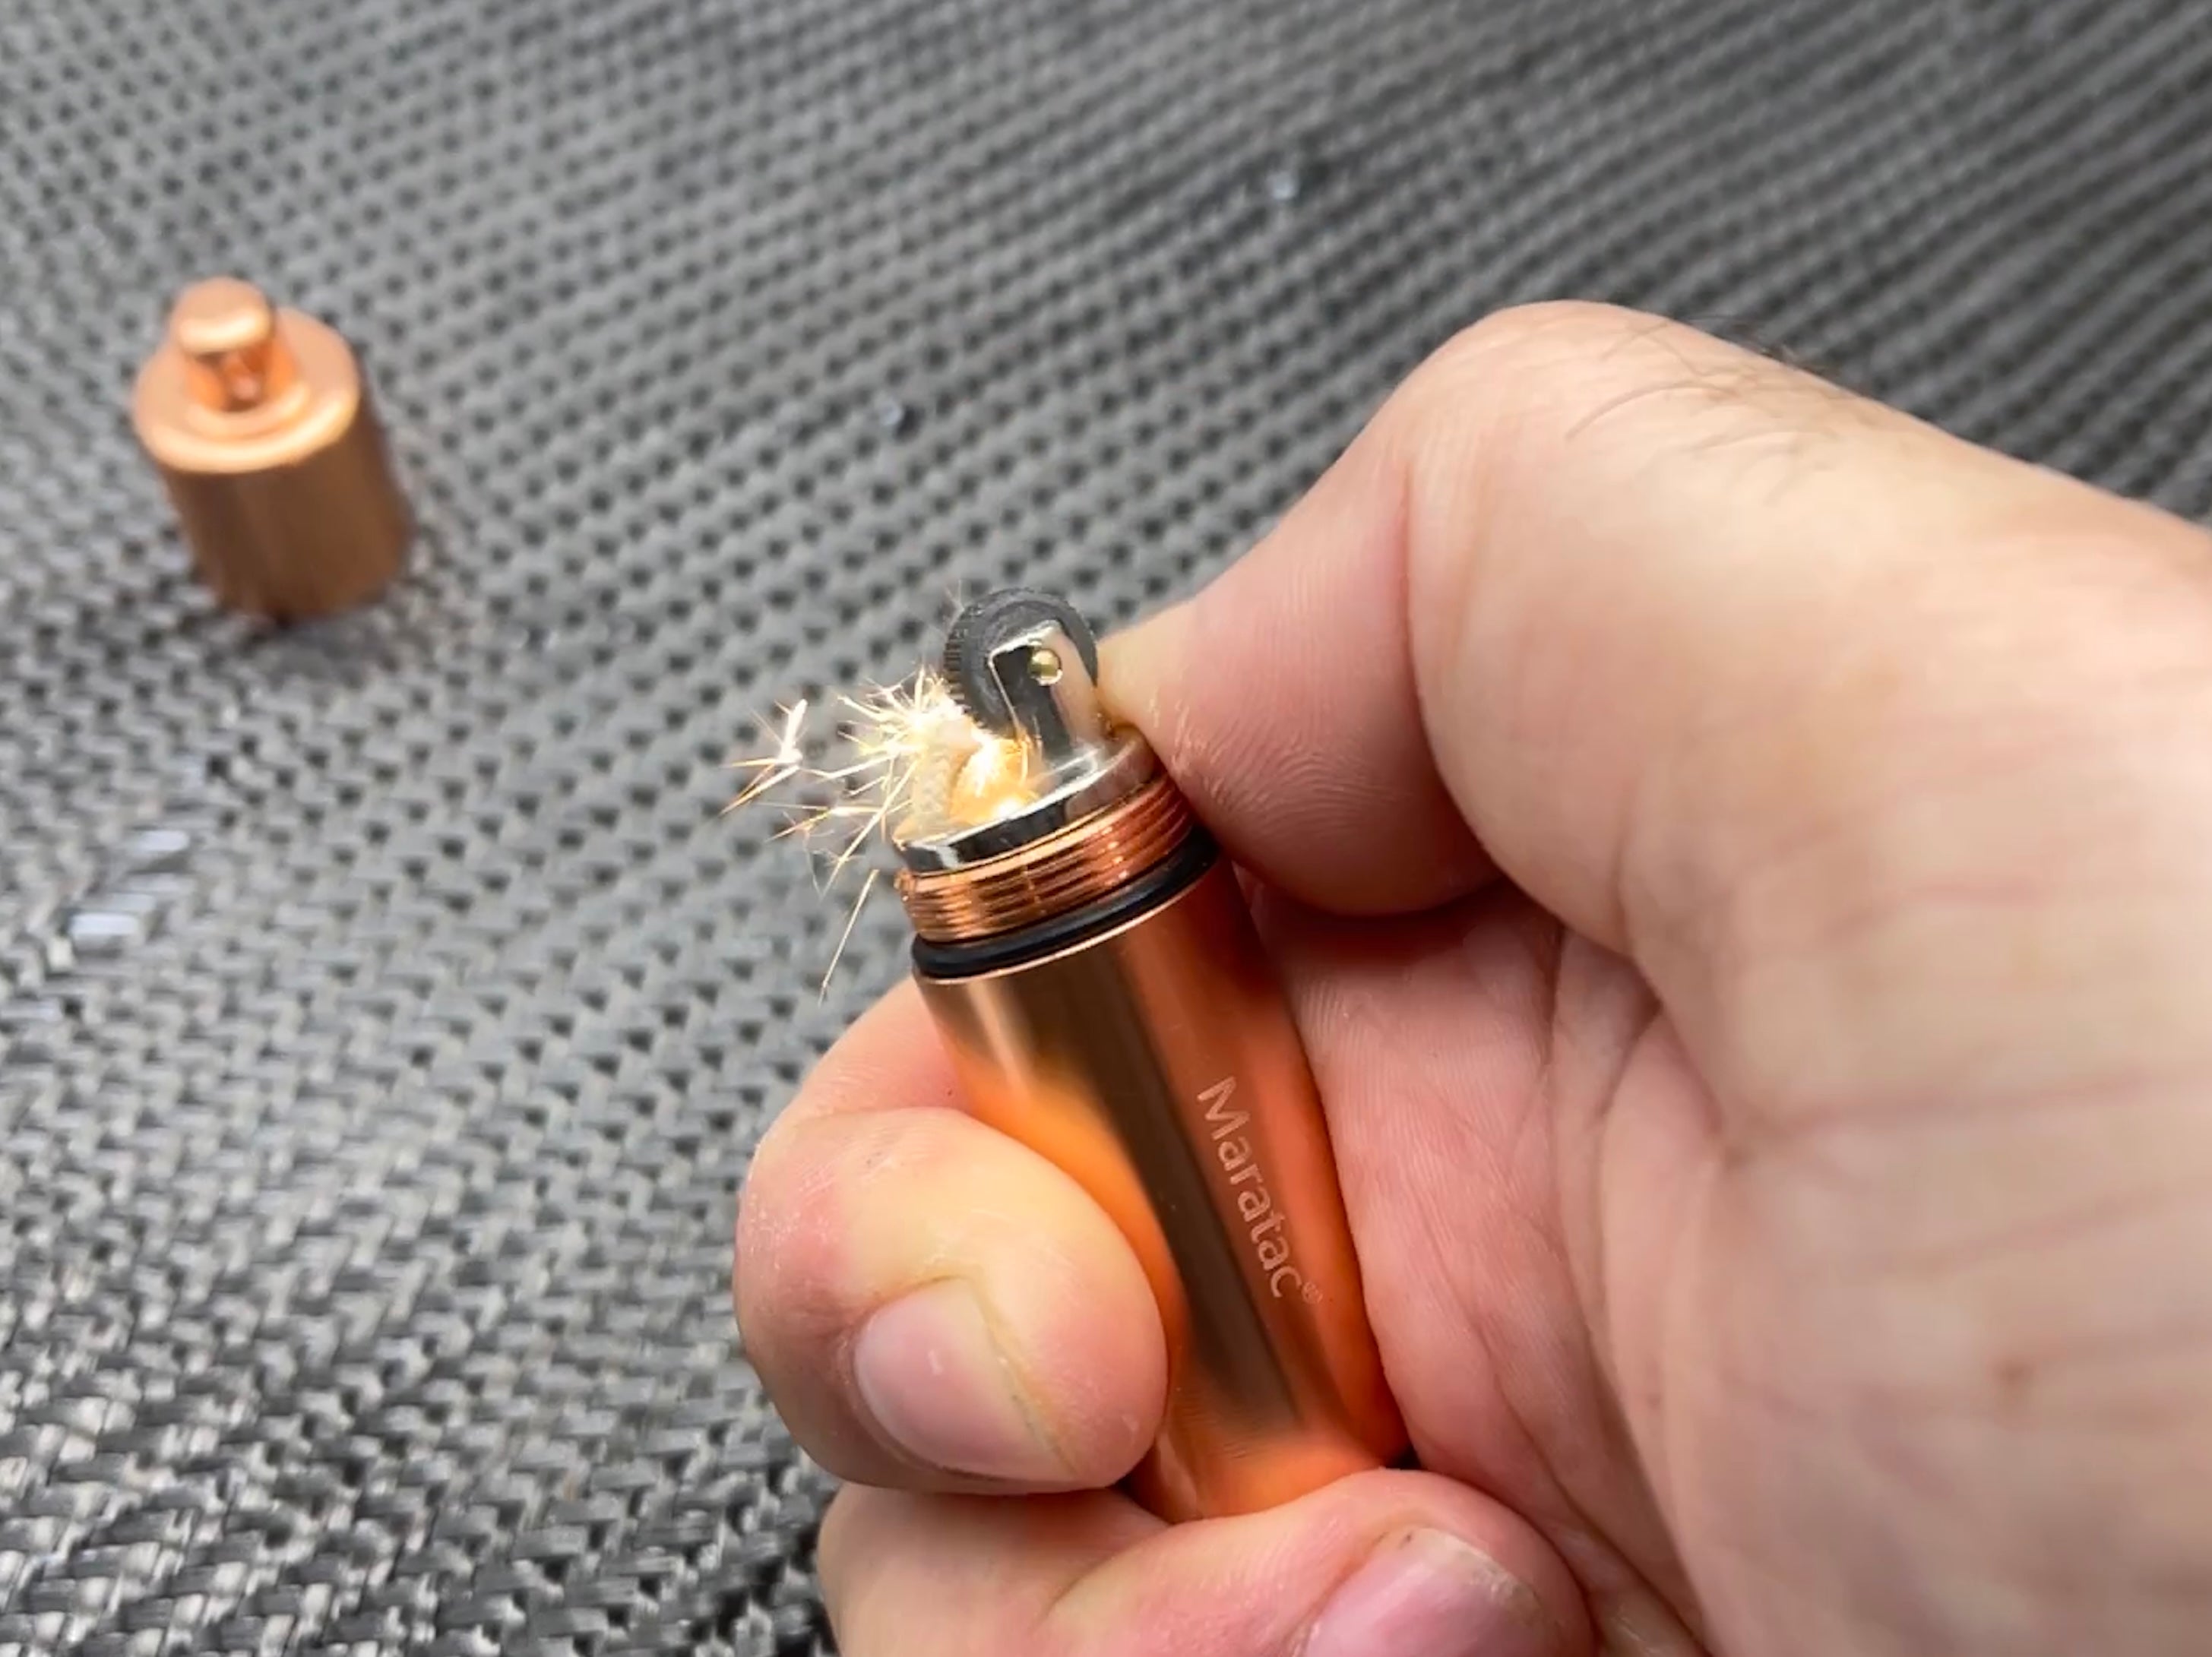 Copper XL Peanut Lighter Gen 3 By Maratac